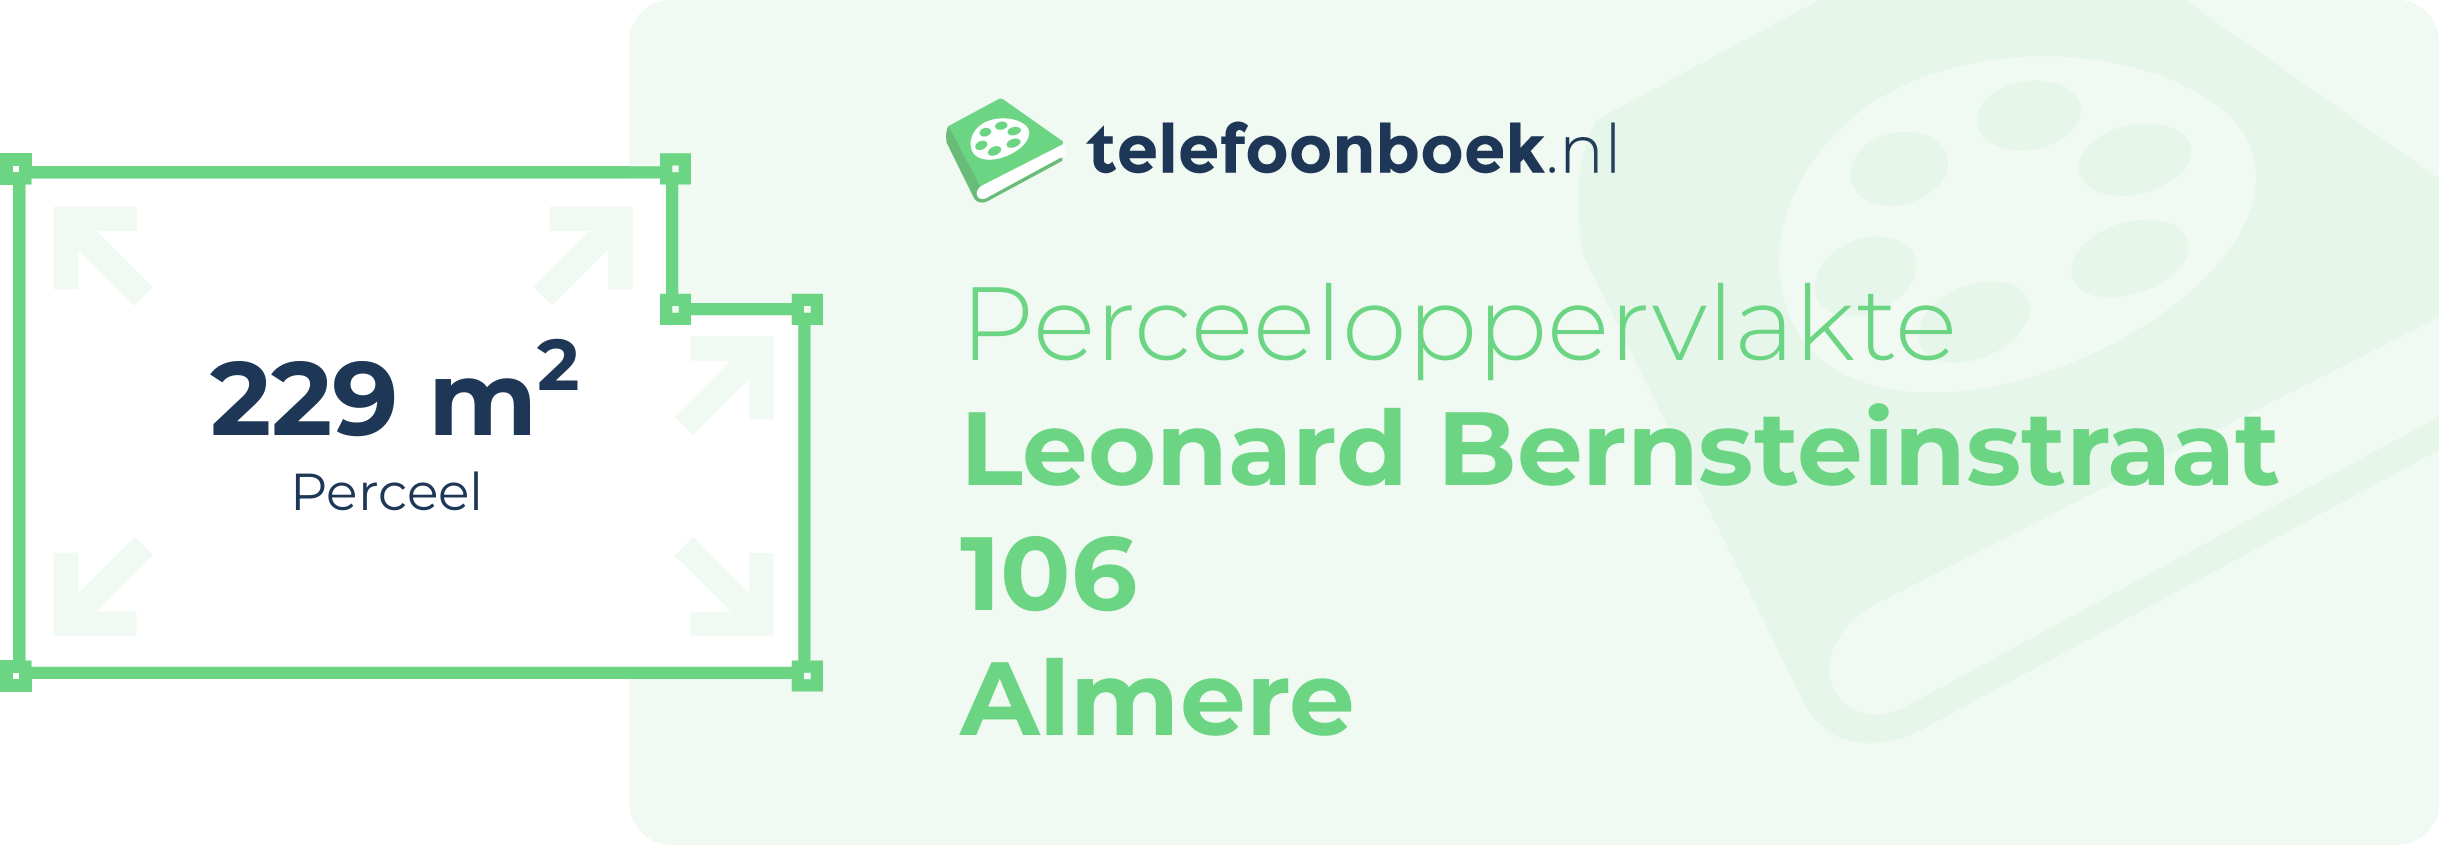 Perceeloppervlakte Leonard Bernsteinstraat 106 Almere